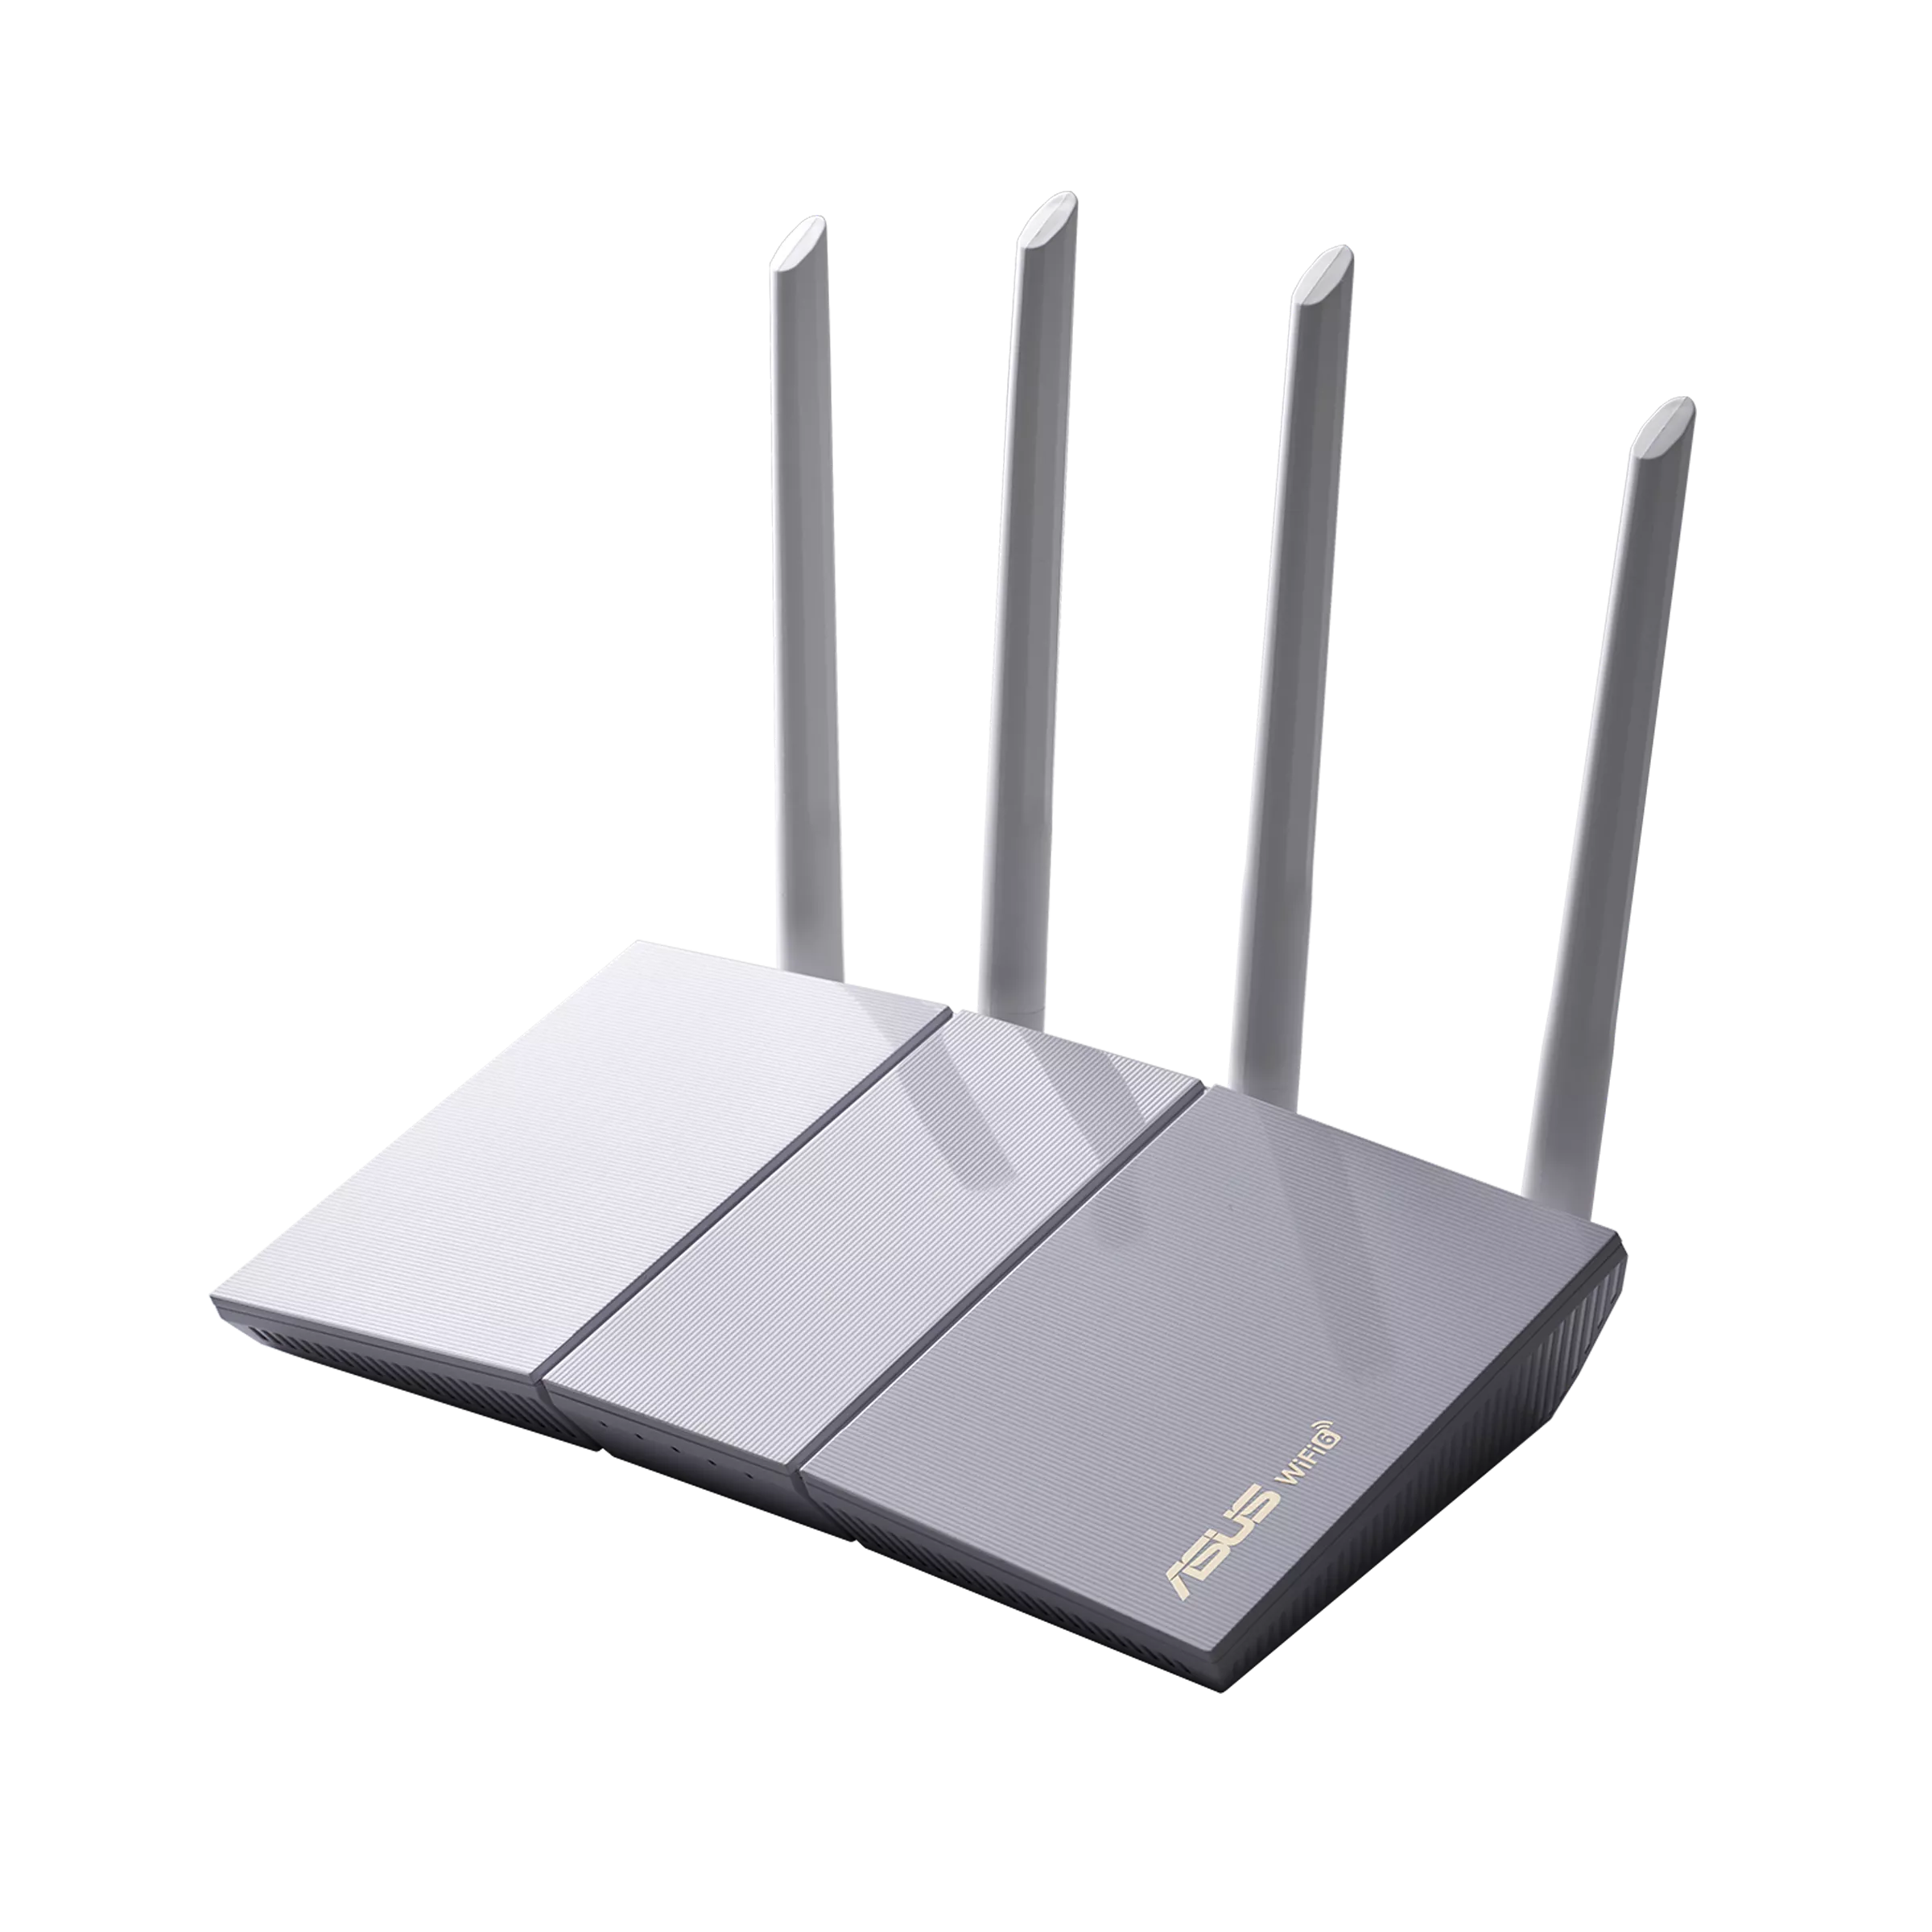 RT-AX55 ASUS Двухдиапазонный маршрутизатор стандарта Wi-Fi 802.11ax (AX1800) с технологиями MU-MIMO и OFDMA, информационной защитой AiProtection Classic на базе технологий Trend Micro и поддержкой технологии ячеистых сетей ASUS AiMesh